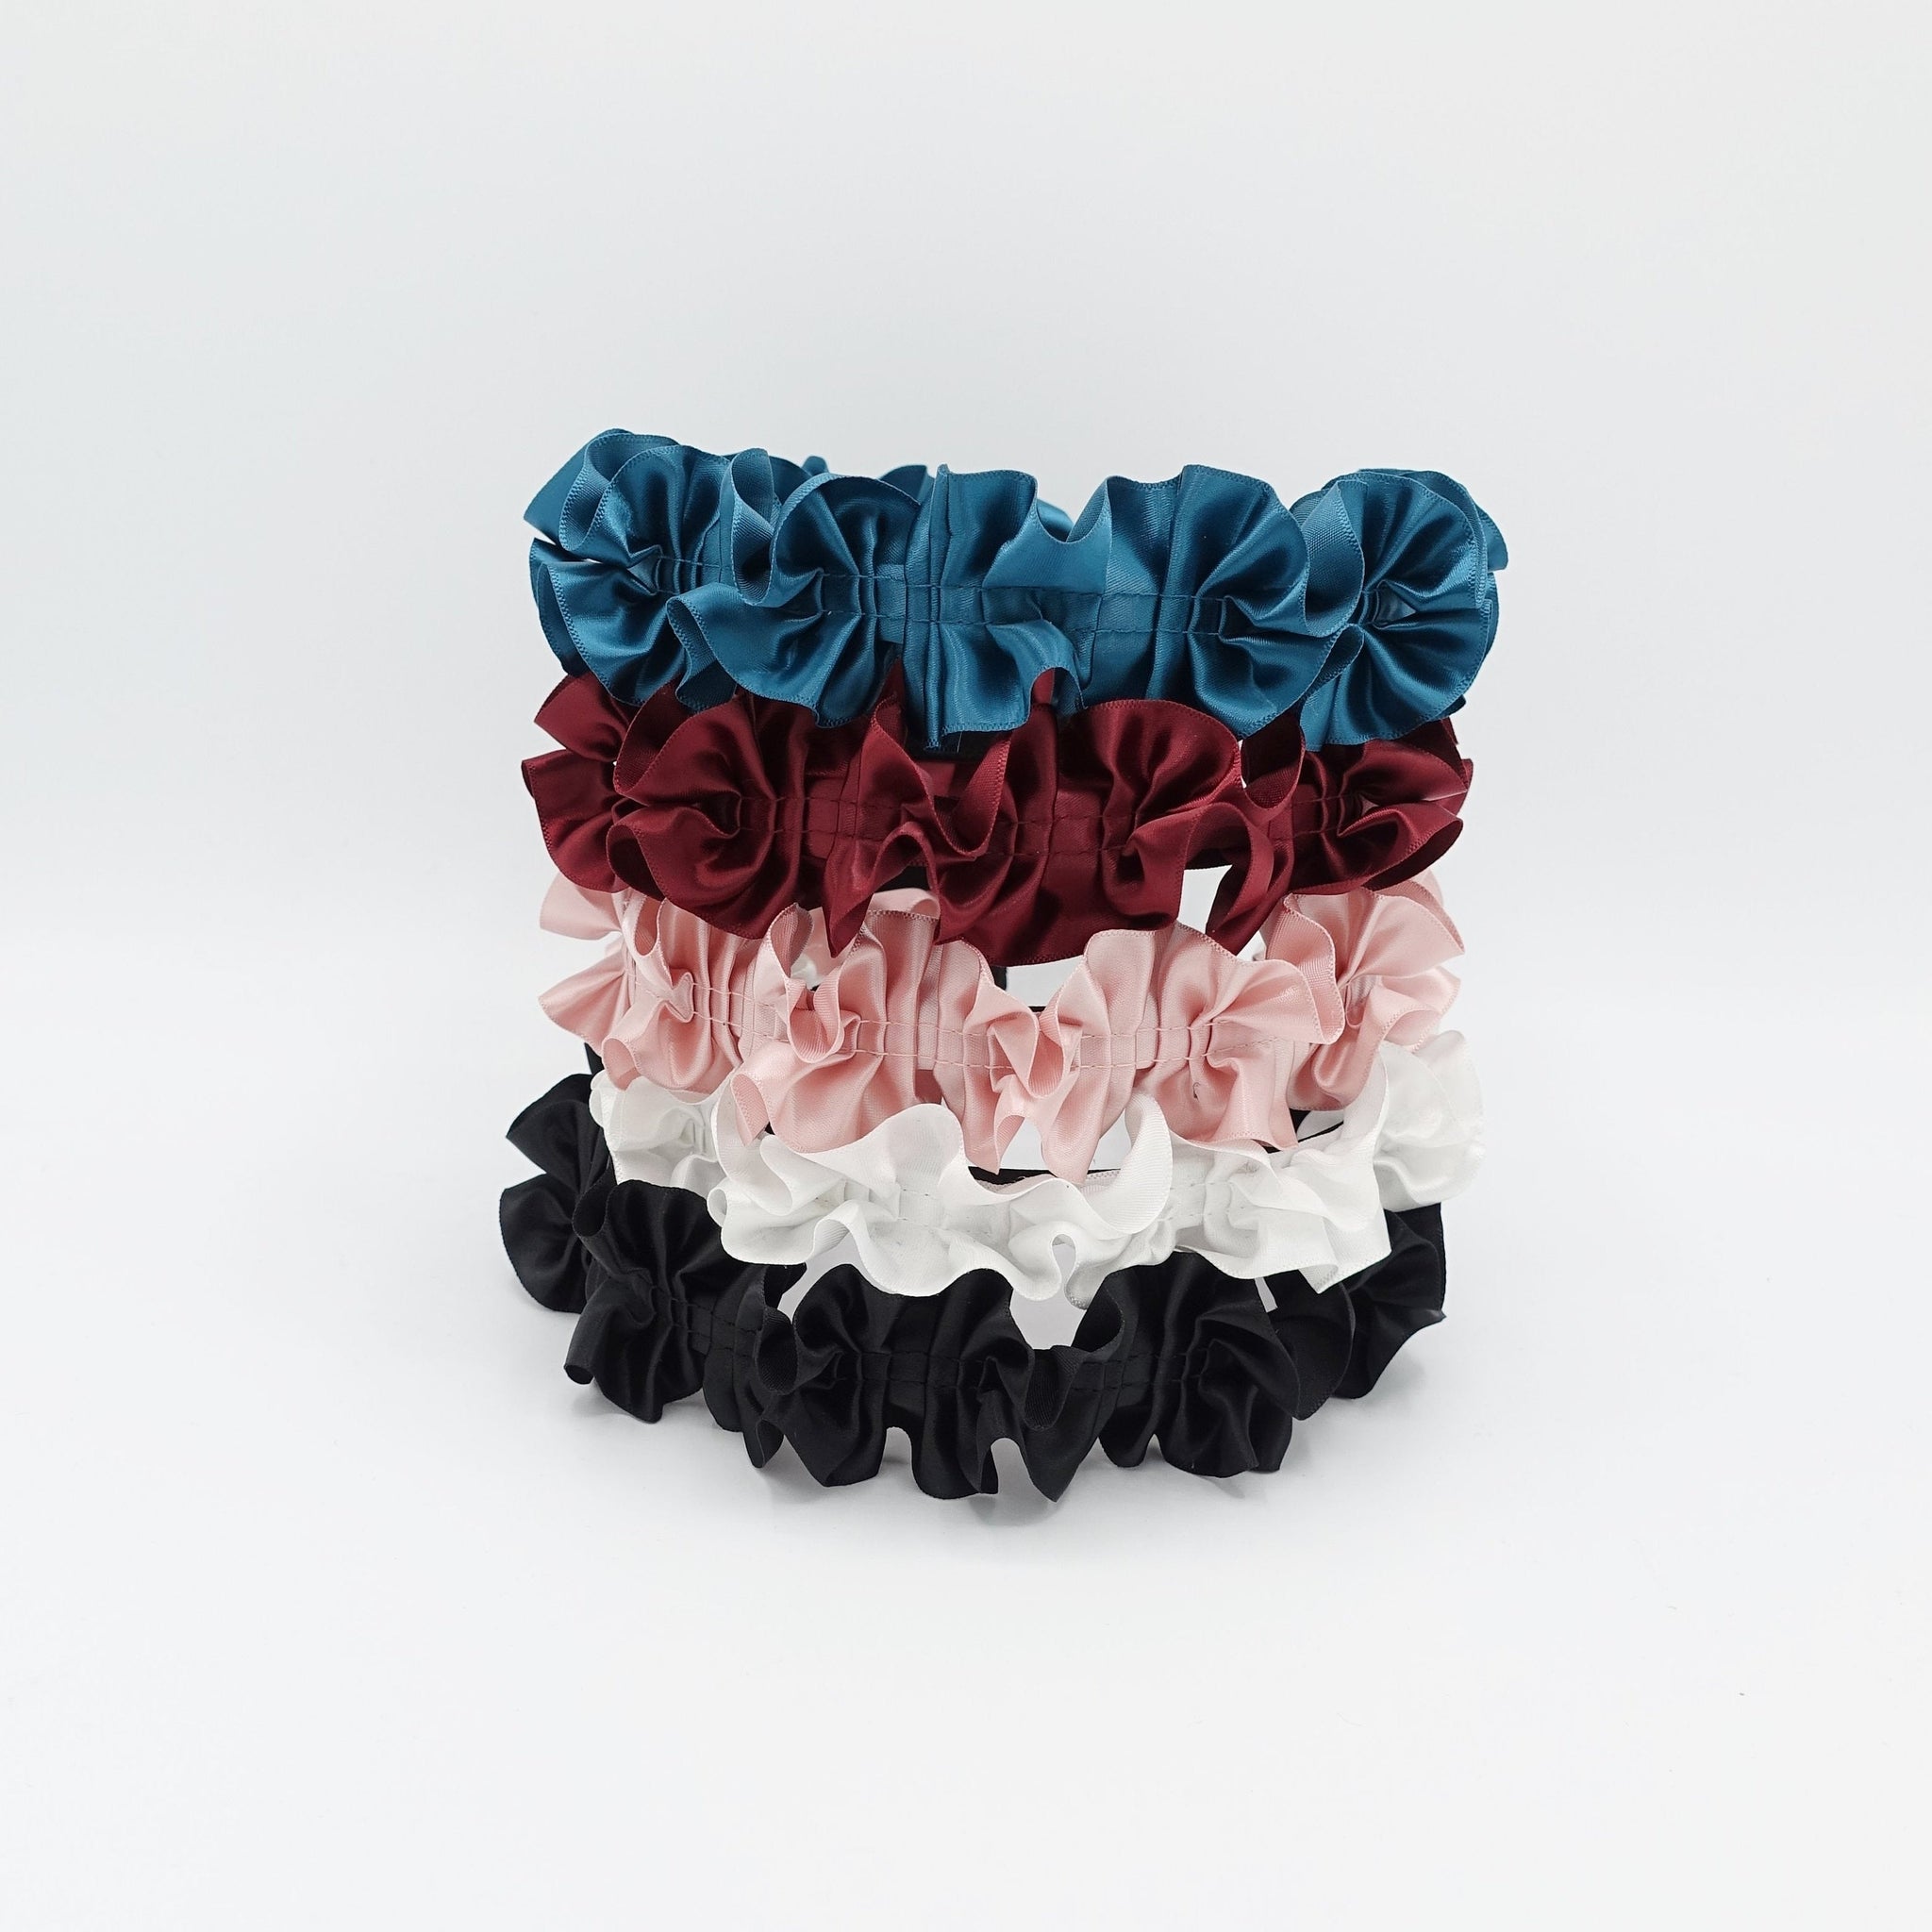 veryshine.com Bridal acc. satin pleats flower headband glossy thin hairband for women